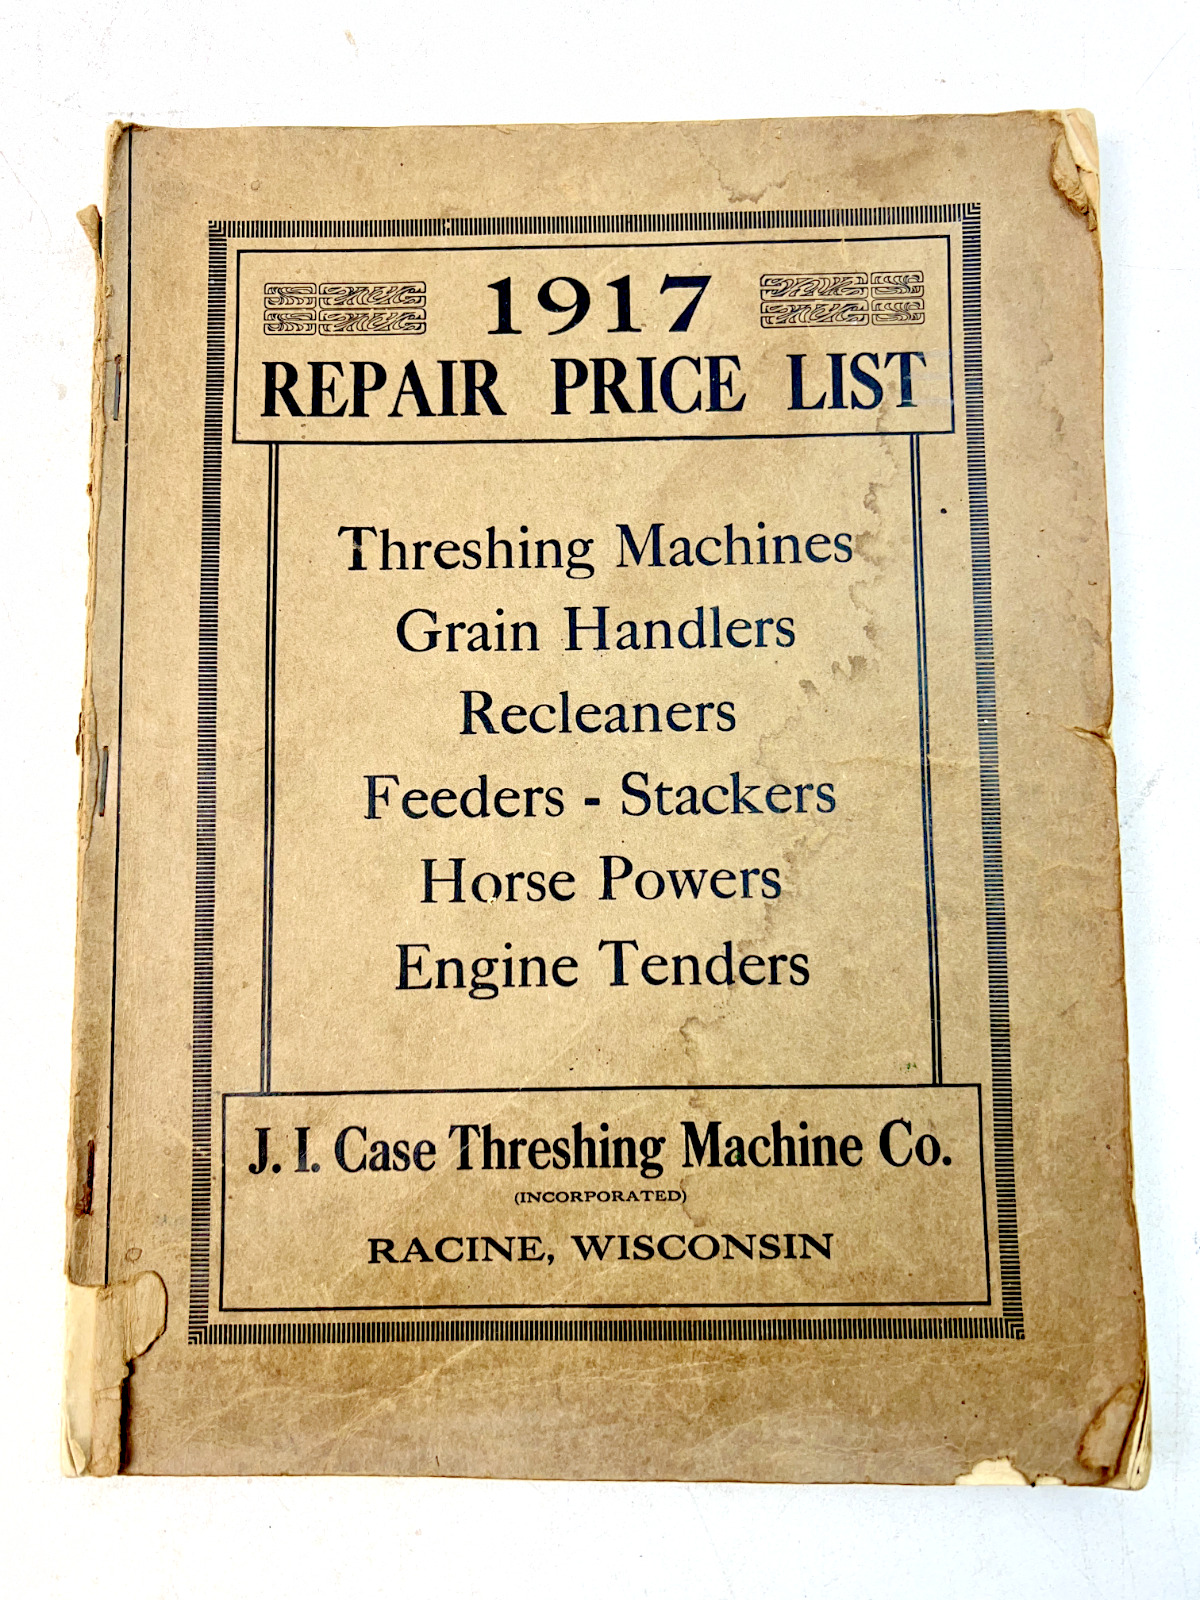 Antique 1917 Repair Price List - J.I. Case Threshing Machine Co. - Racine, WI